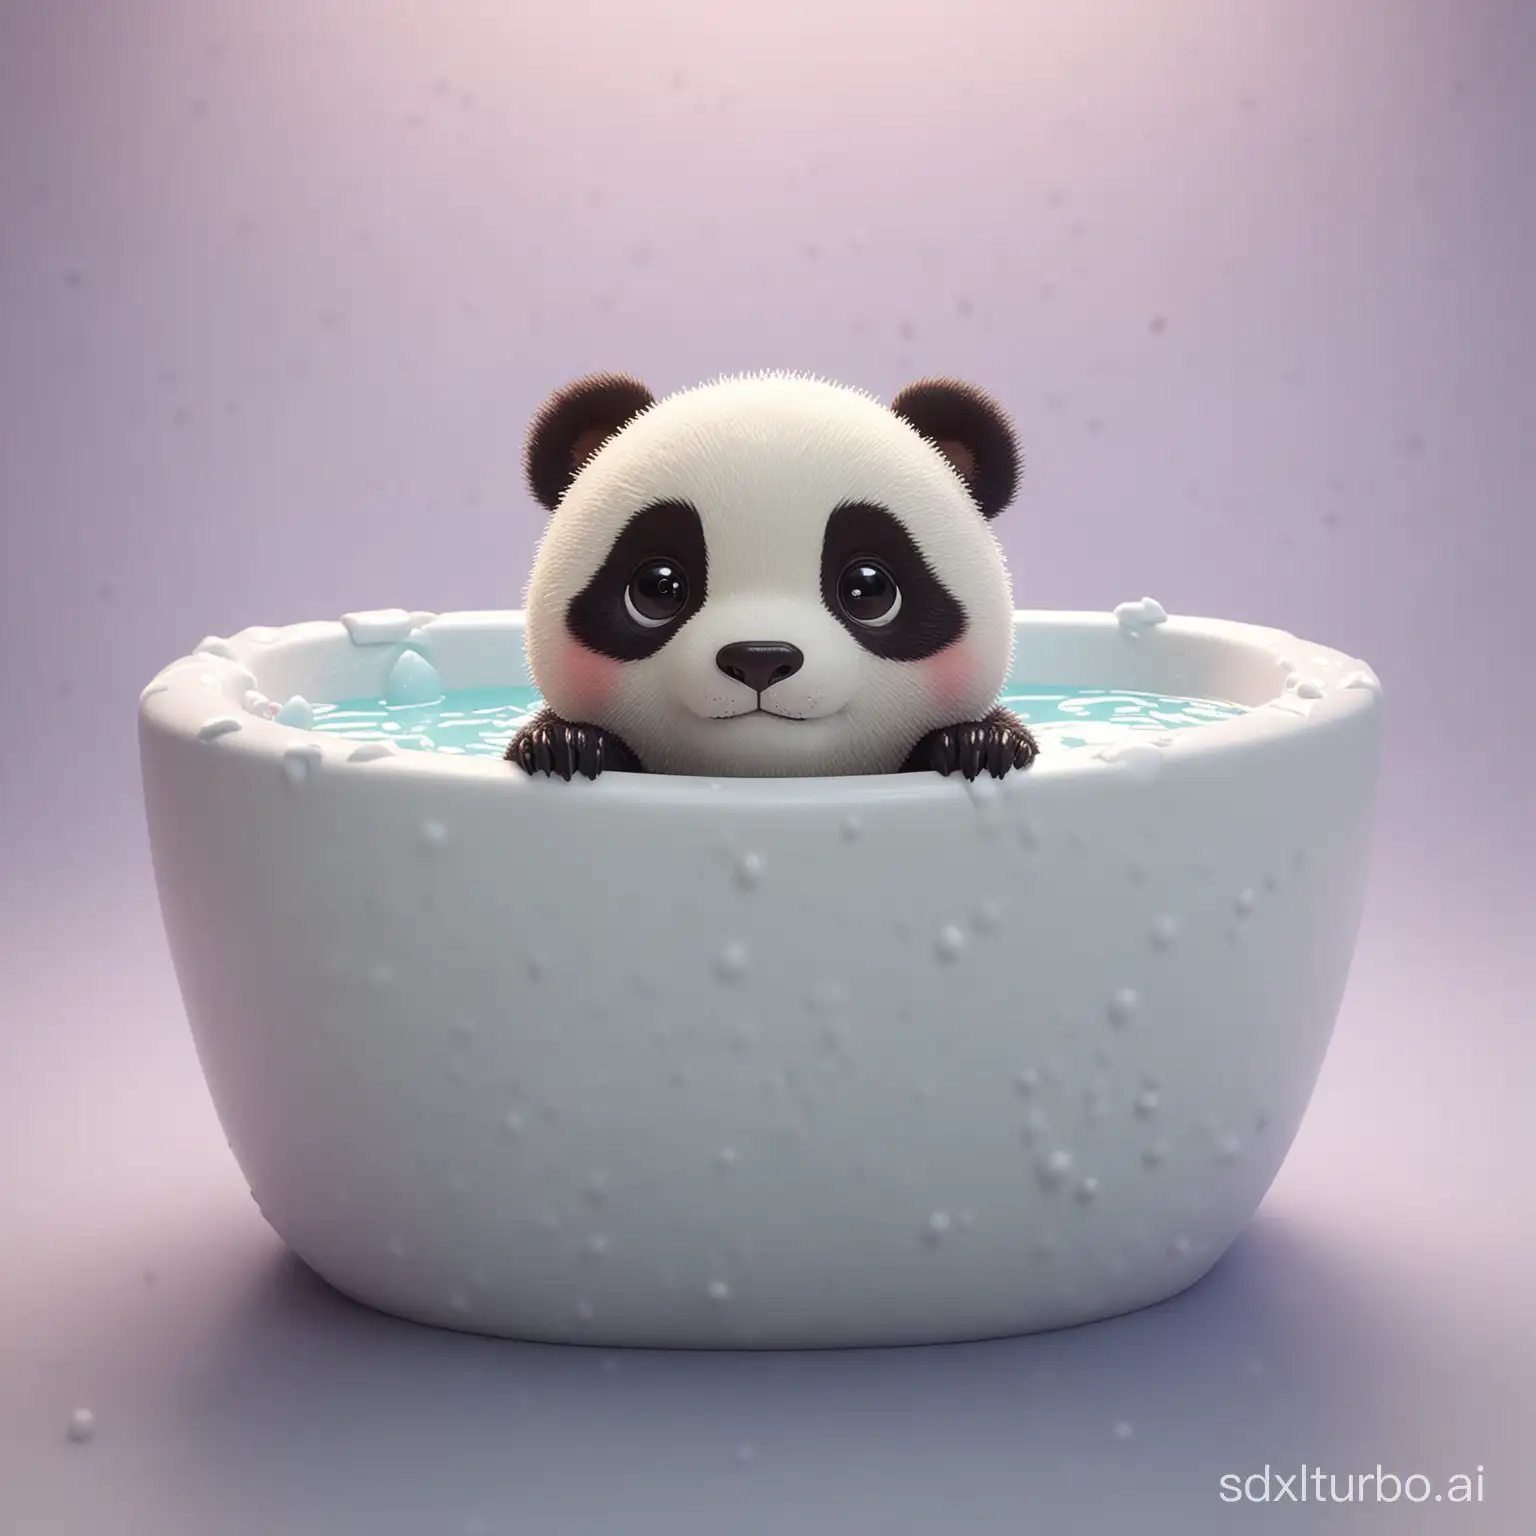 Adorable-Miniature-Panda-Toy-in-Pastel-Bathtub-Setting